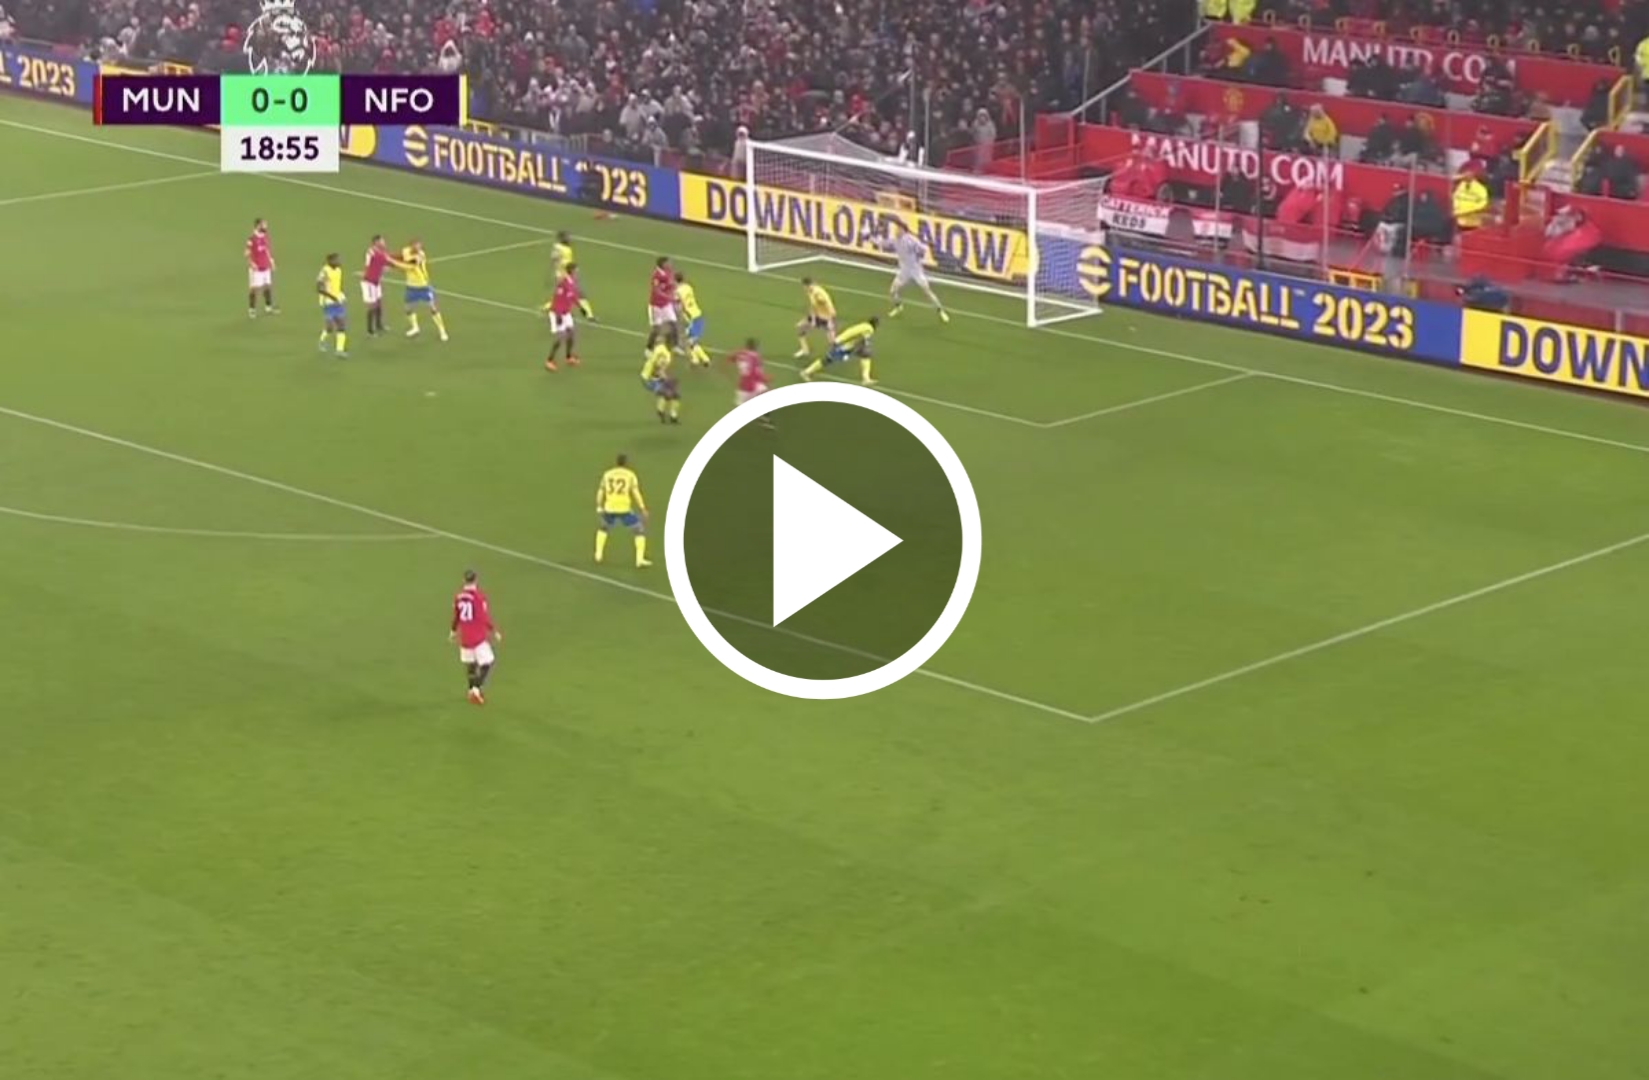 (Video) Goal! - Watch Marcus Rashford sensational goal to give Manchester United Lead against Nottingham Forest 1 Sportelo